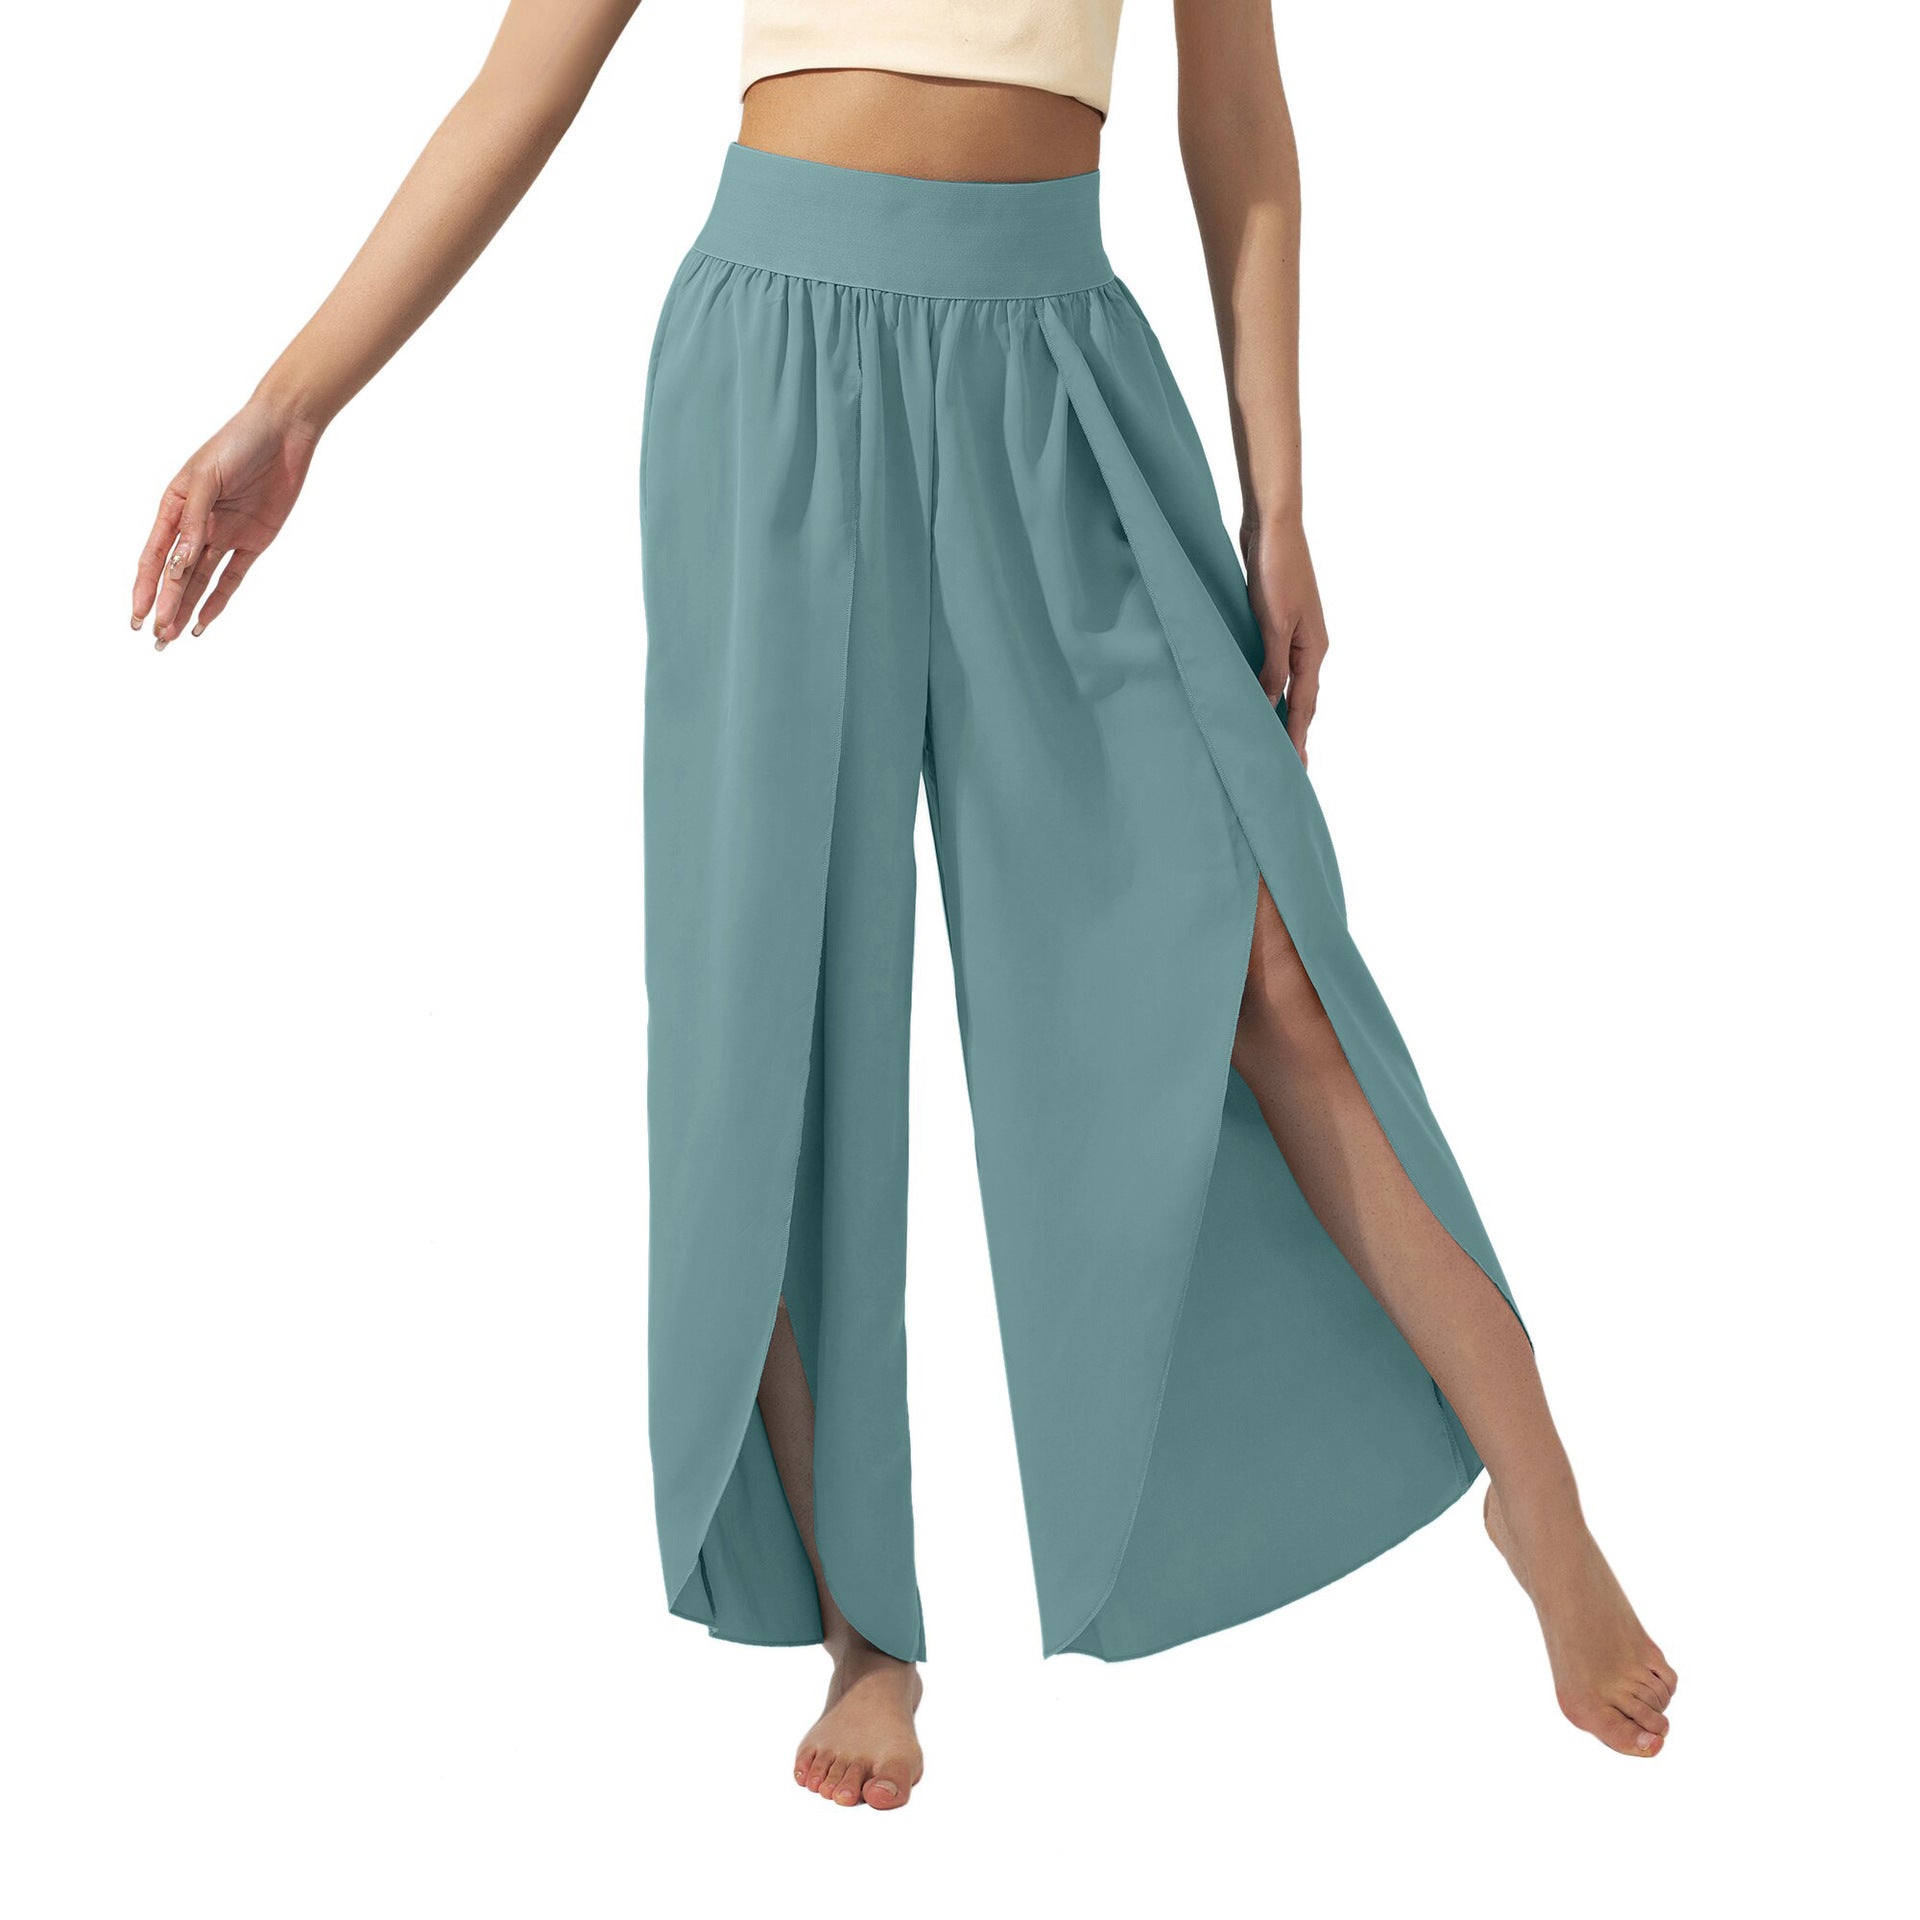 Women's Fashionable All-match Slimming High Waist Slit Yoga Pants